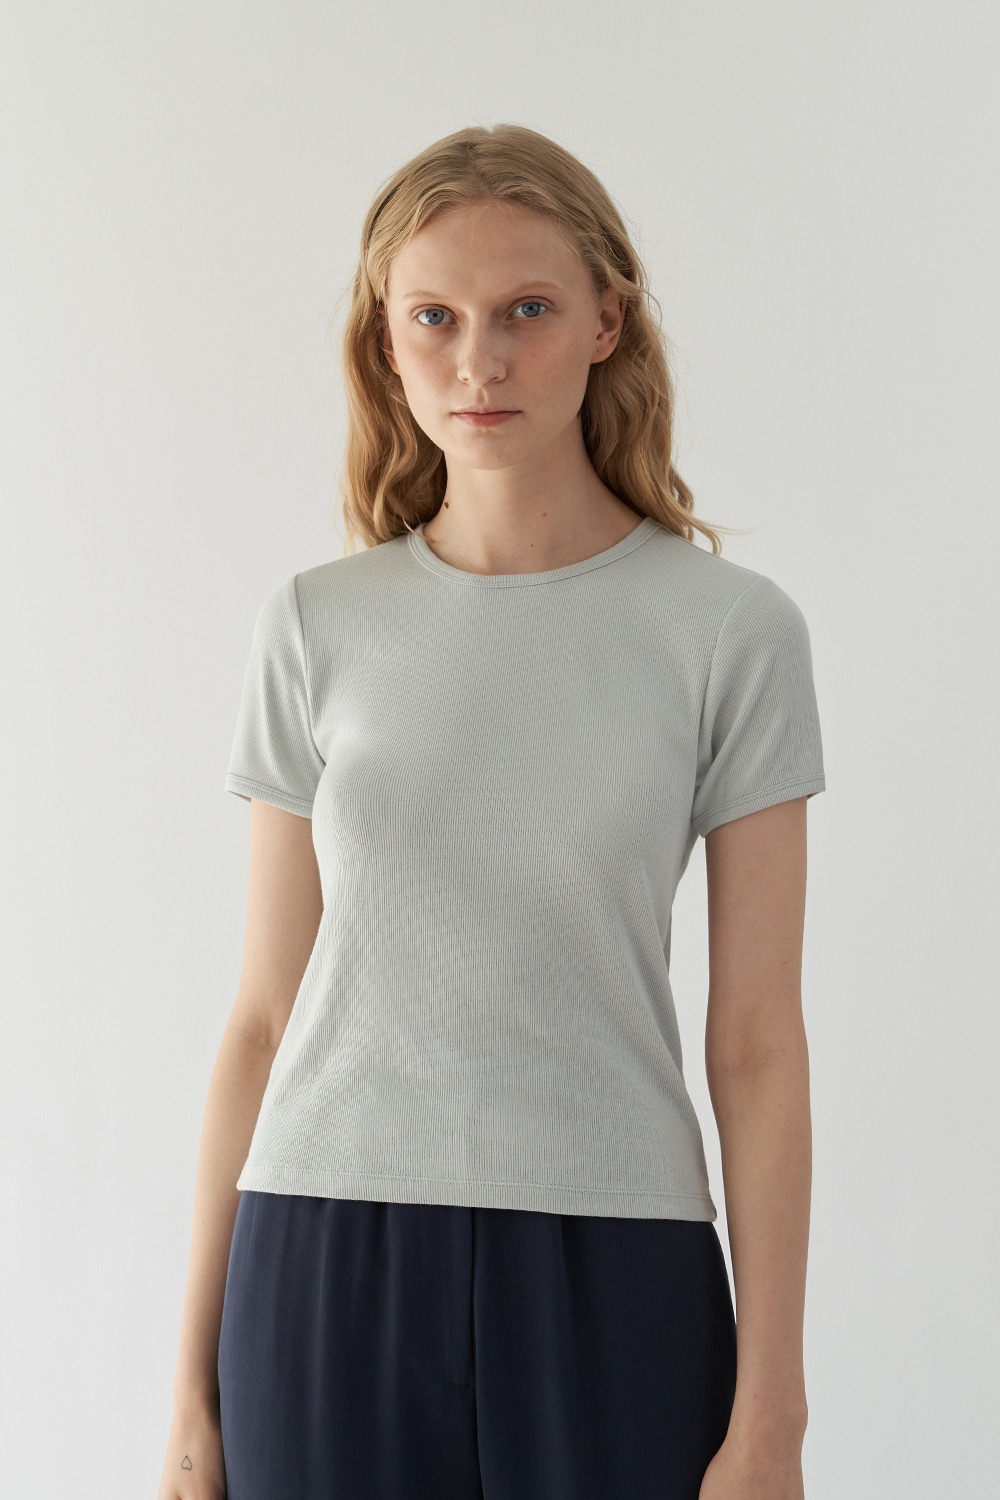 [-30%] Ribbed Slim T-Shirt ( Mint grey )